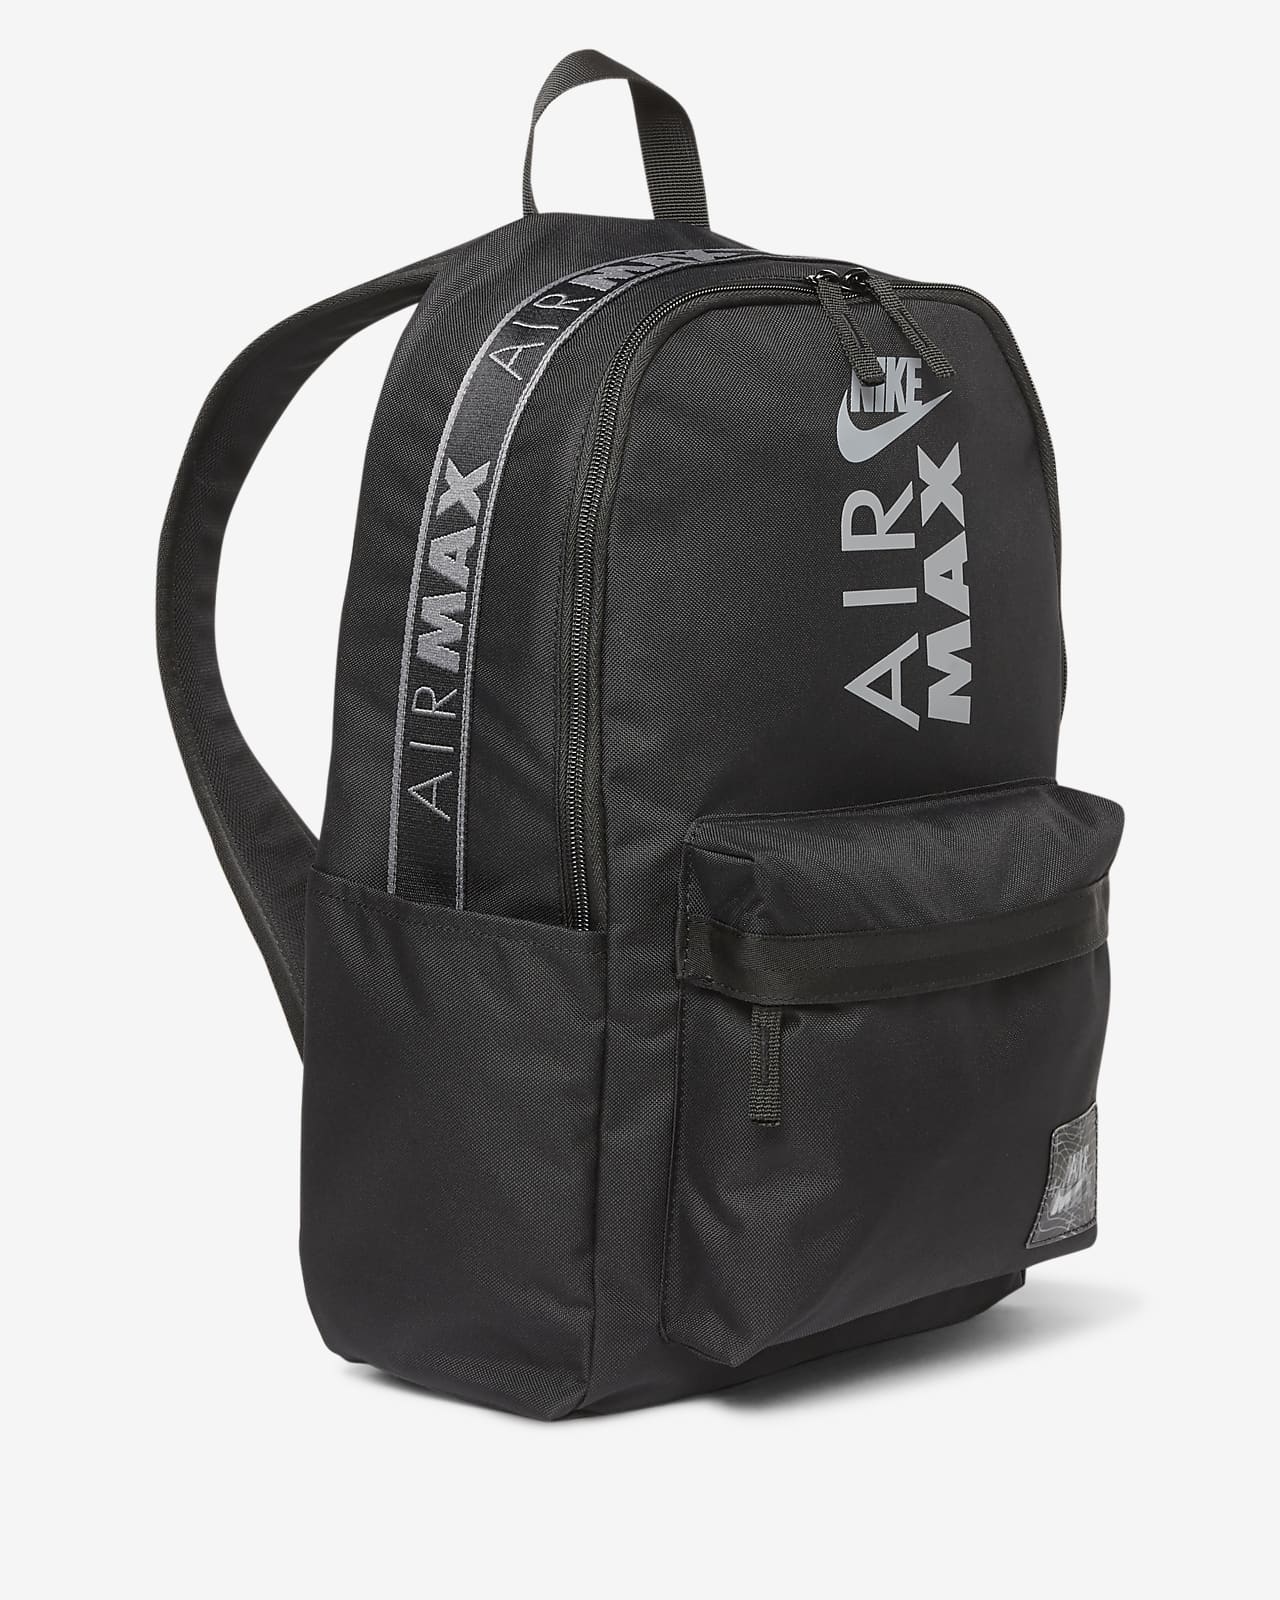 Nike Air Backpack-Black, Nylon/Polyester